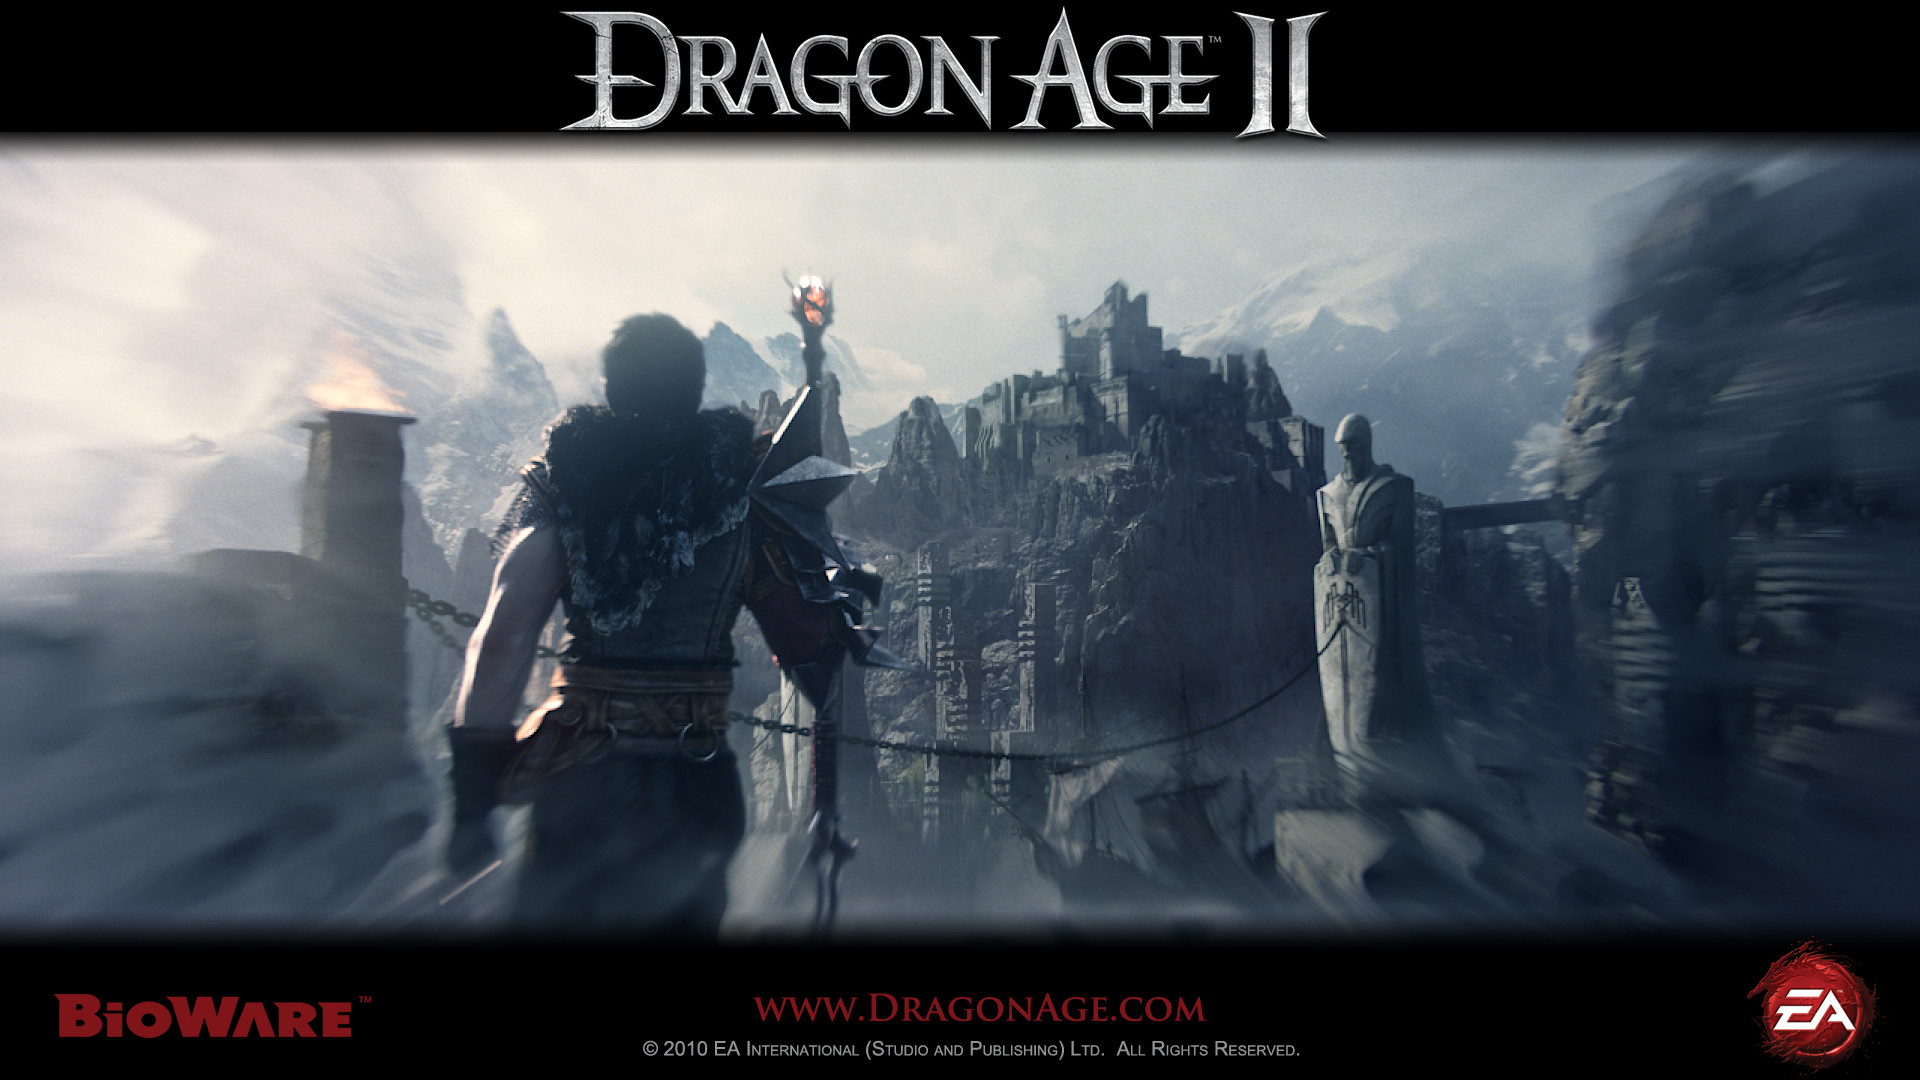 Dragon age origins free. download full game